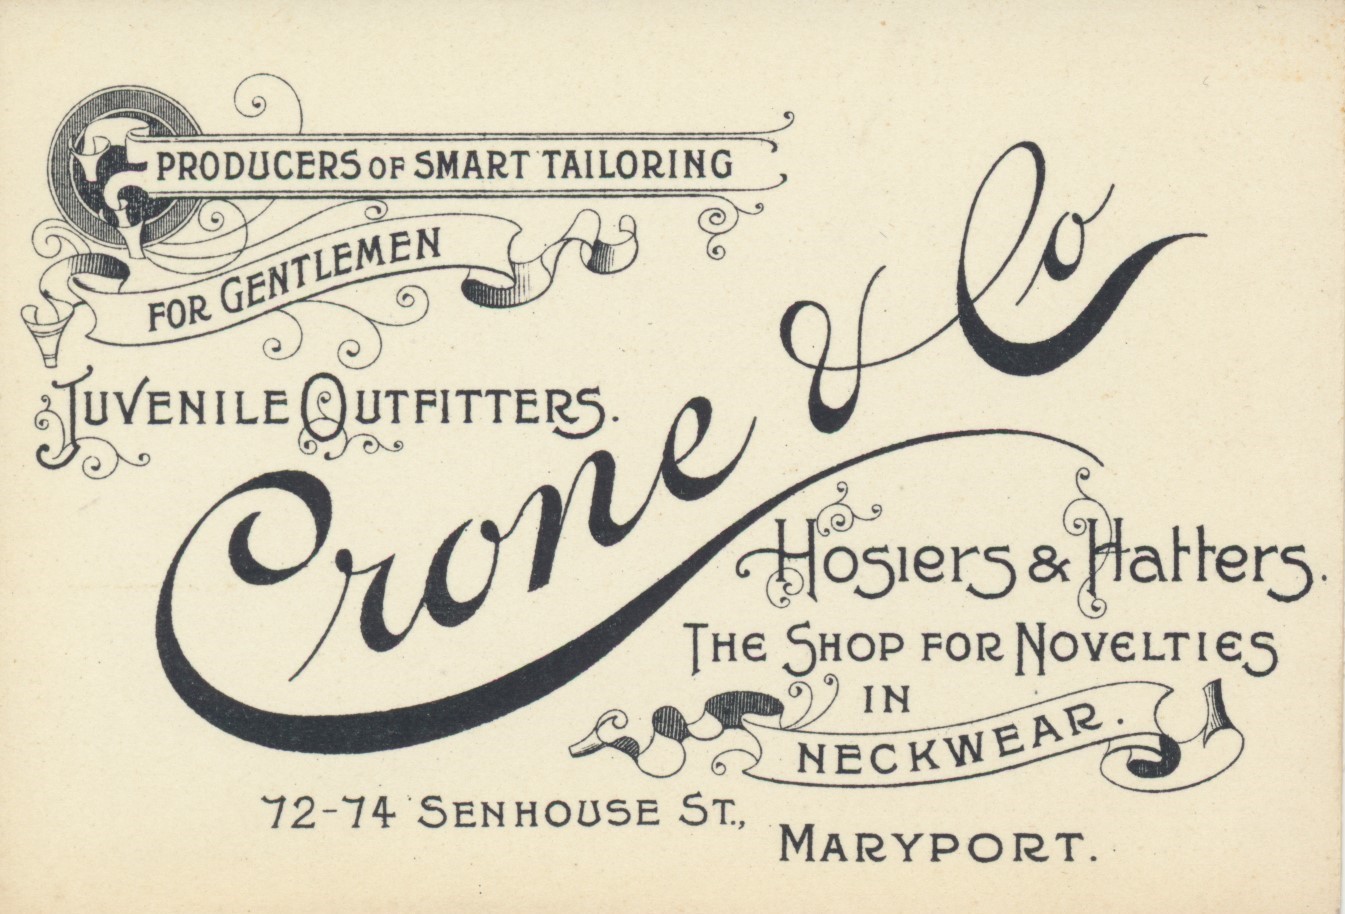 Crone card tailoring hosiers hatters novelties in neckwear 1 jpg